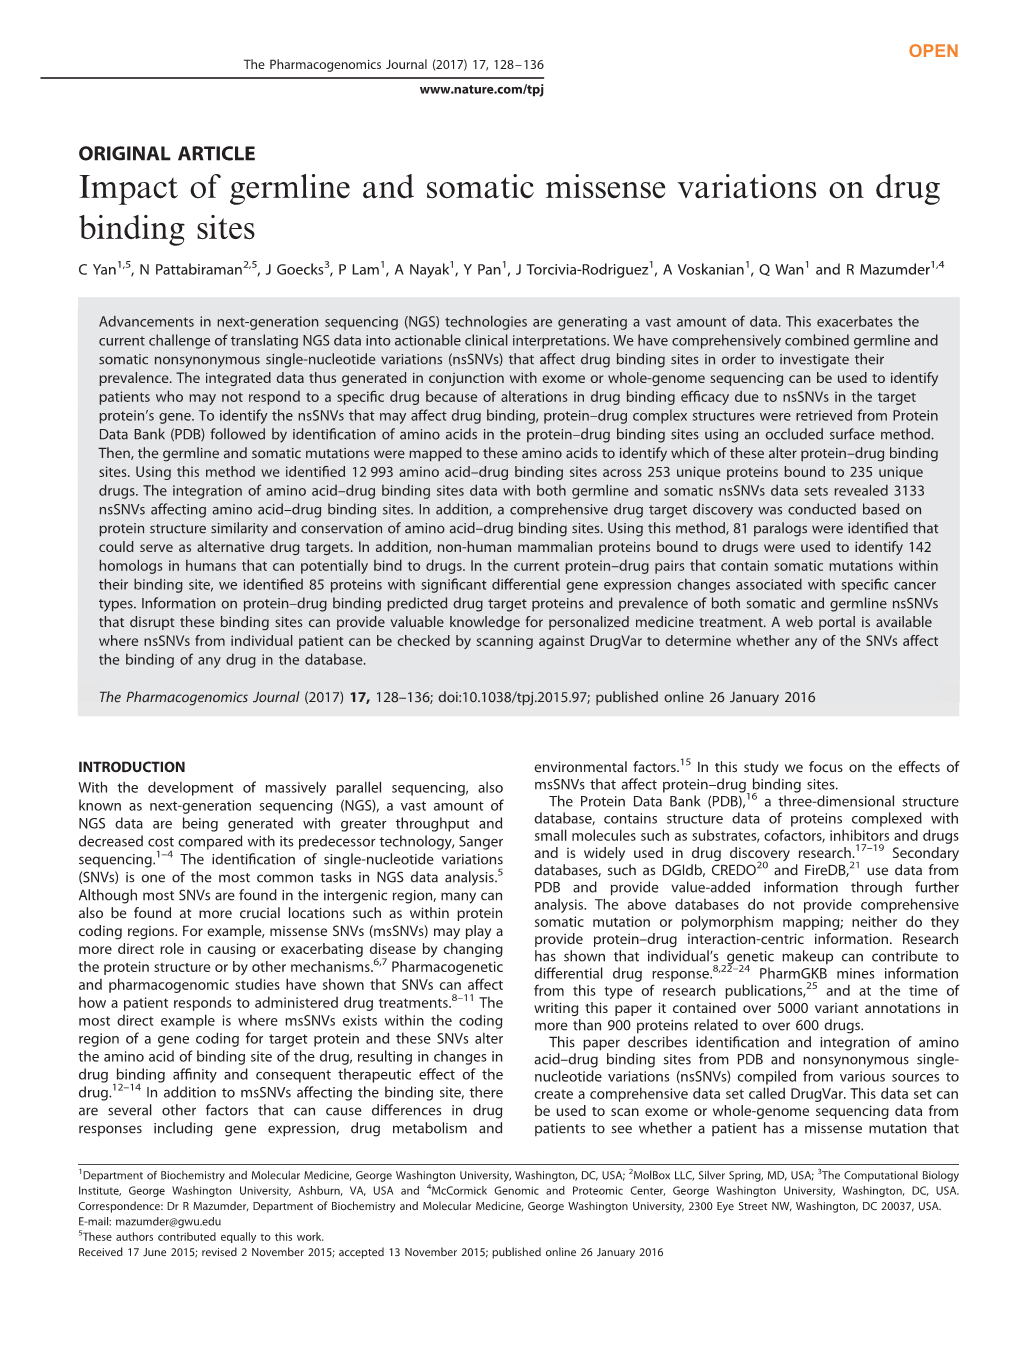 Impact of Germline and Somatic Missense Variations on Drug Binding Sites